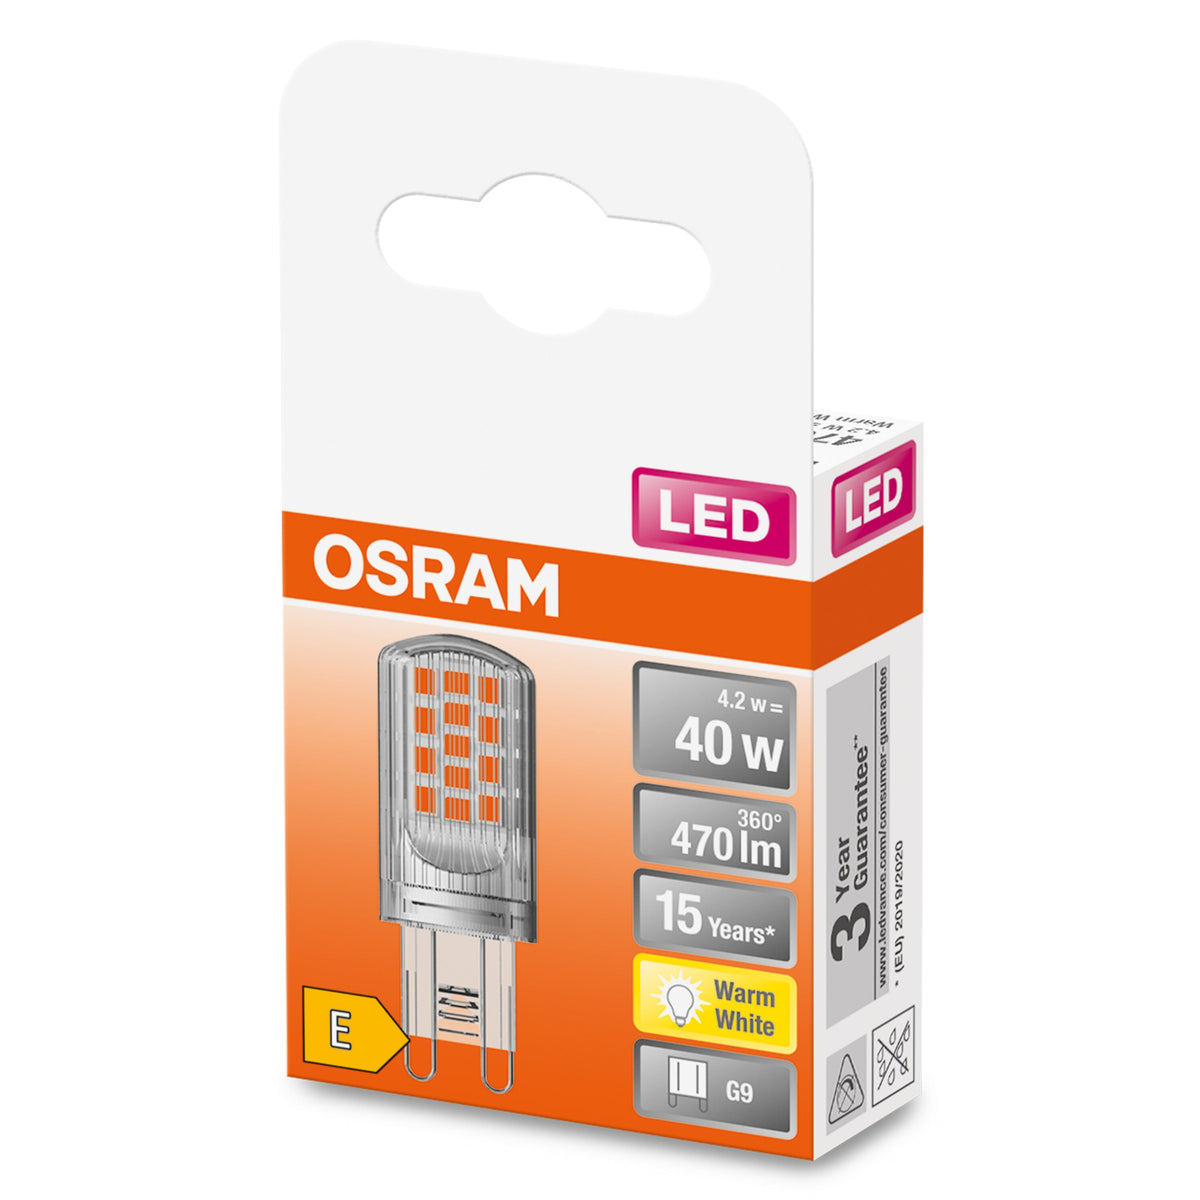 OSRAM LED Lampe à culot enfichable Lampe LED (ex 40W) 4,2W / 2700K blanc chaud PIN G9